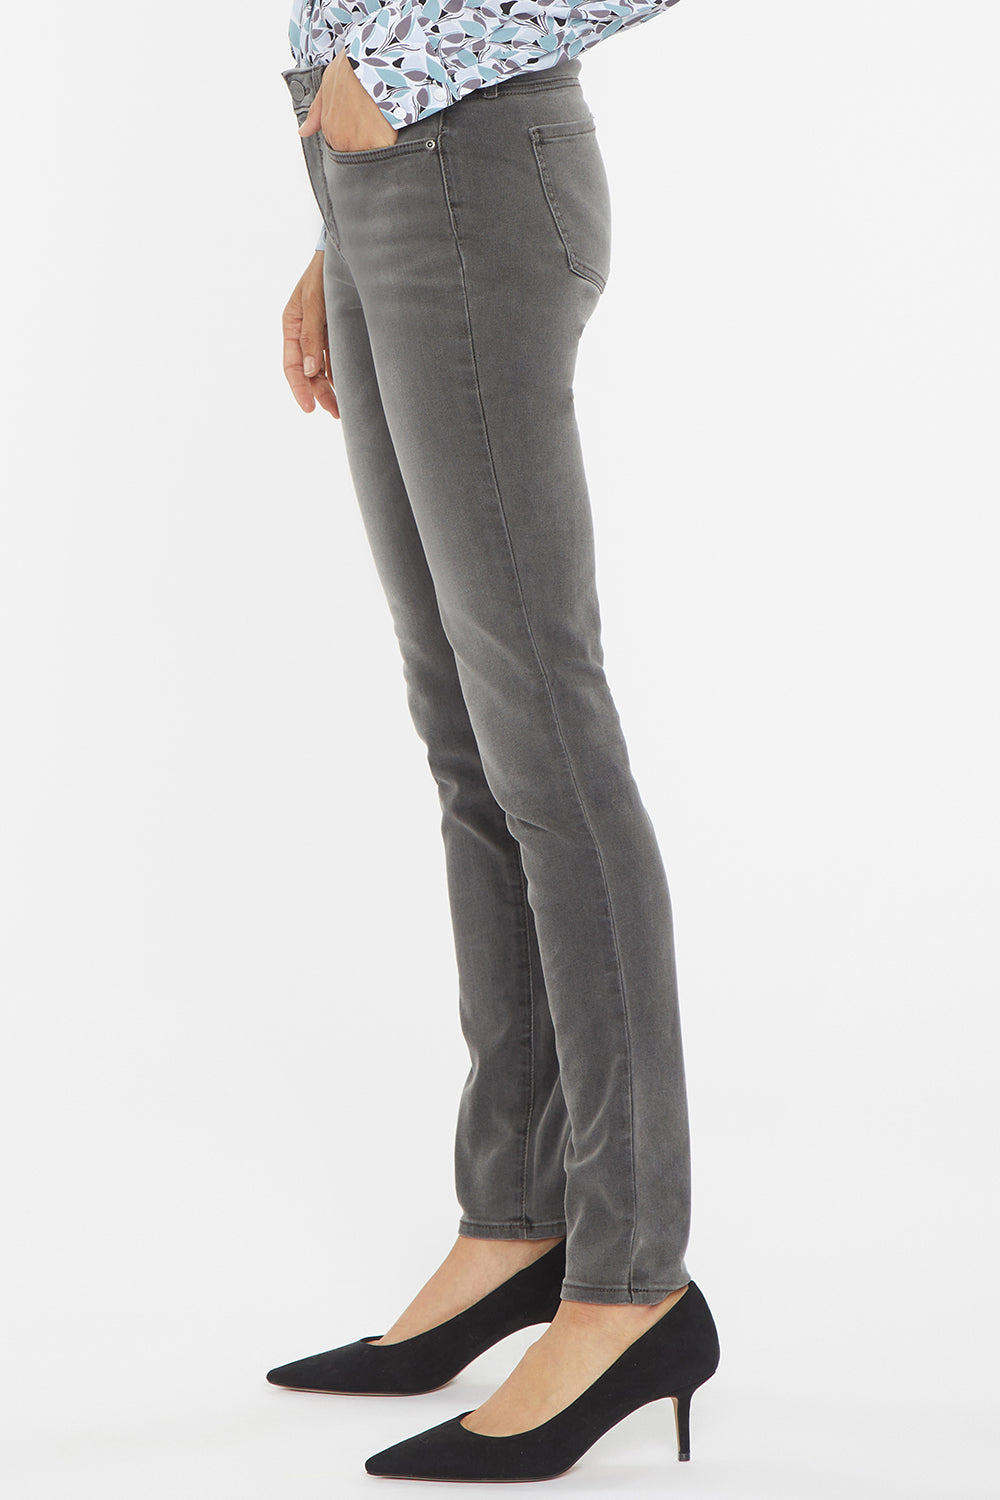 Ami Skinny Jeans In Petite - Castle Hill Grey